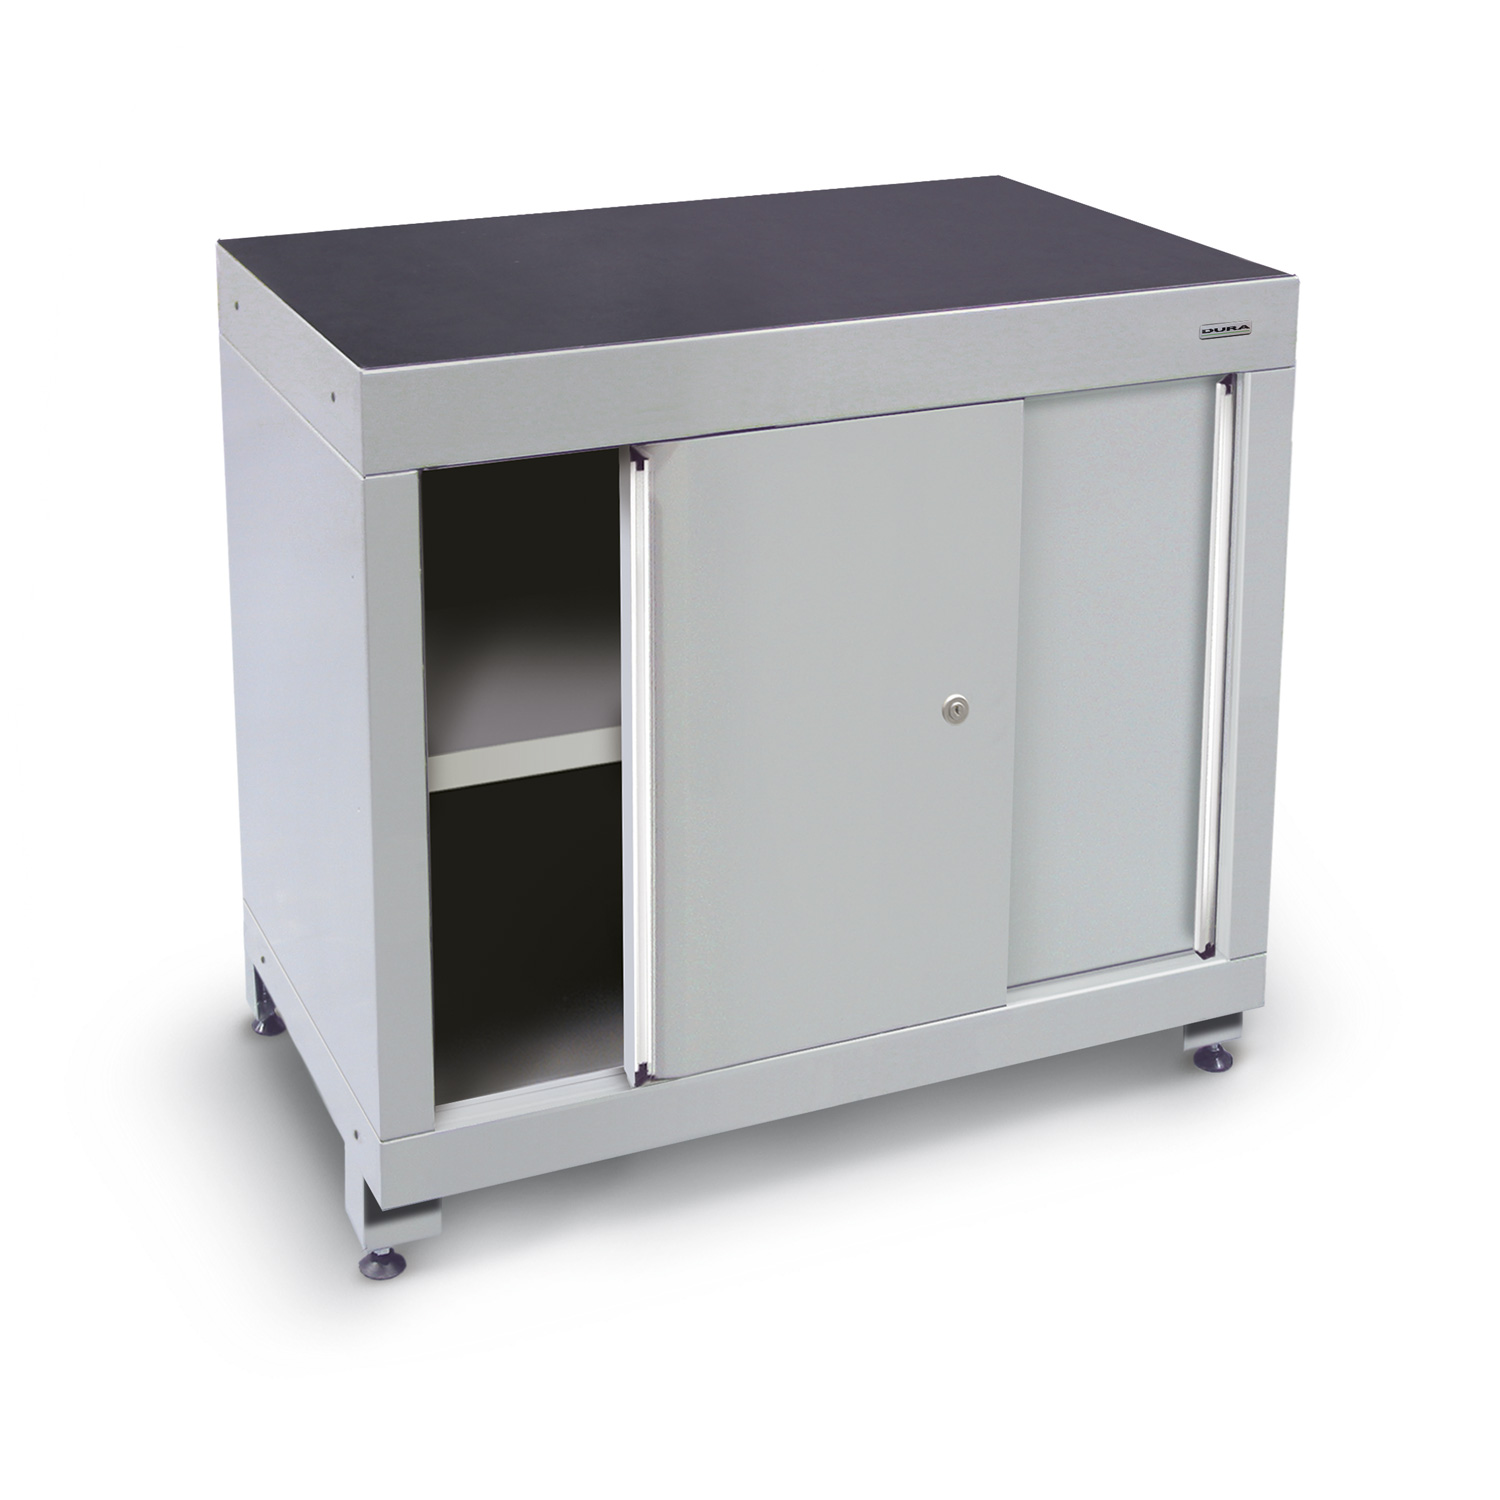 900mm wide base cabinet (double sliding doors/feet)